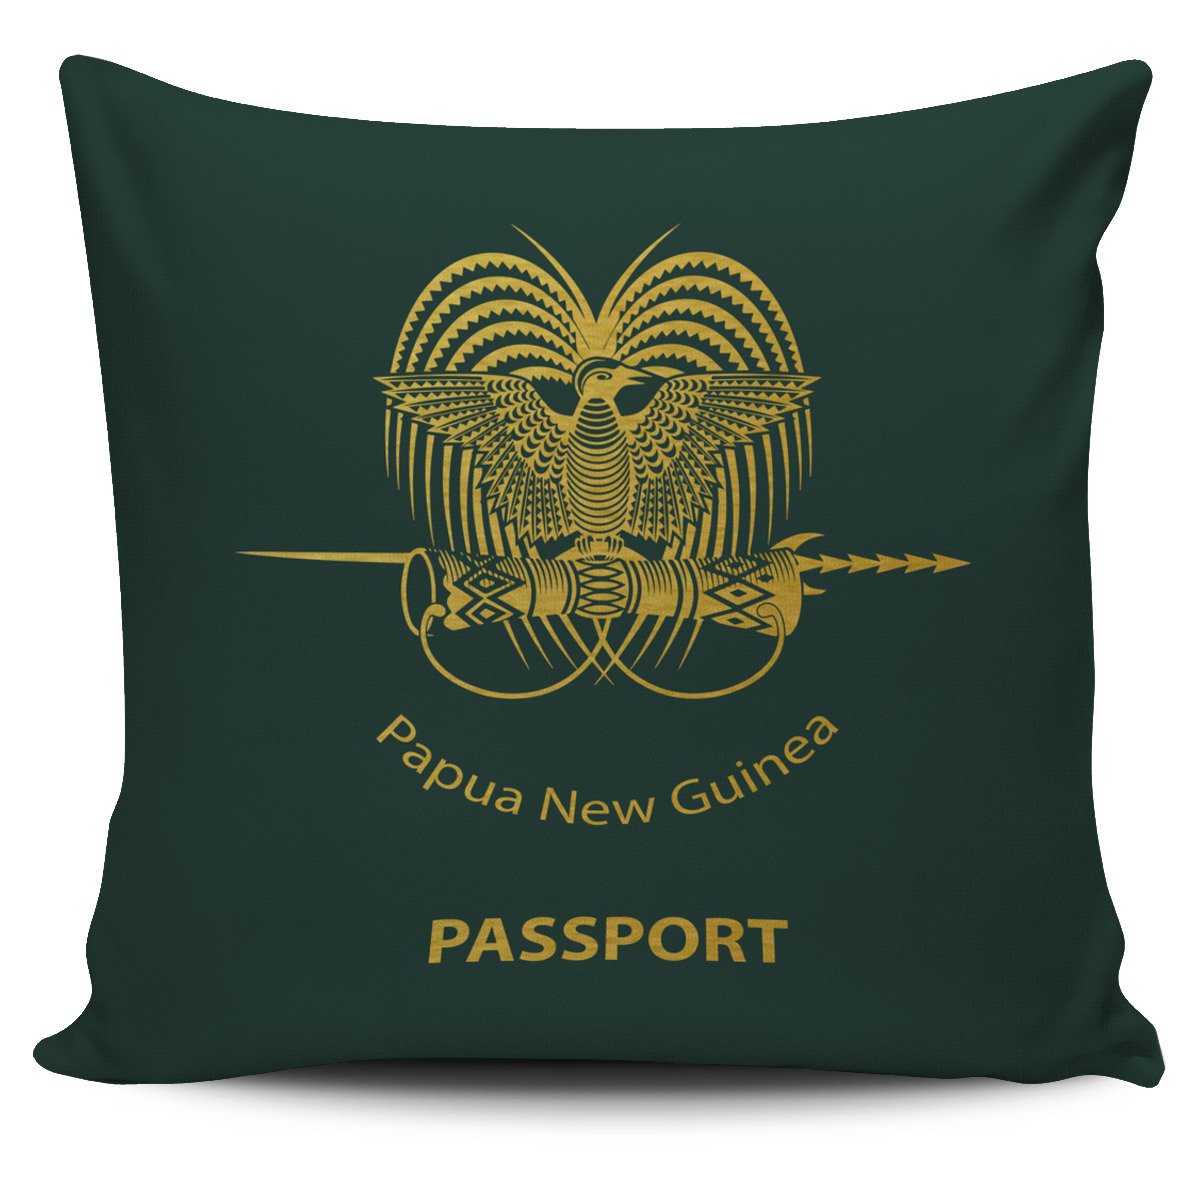 Papua New Guinea Pillow Cover - Passport Version Papua New Guinea One Size Green - Polynesian Pride